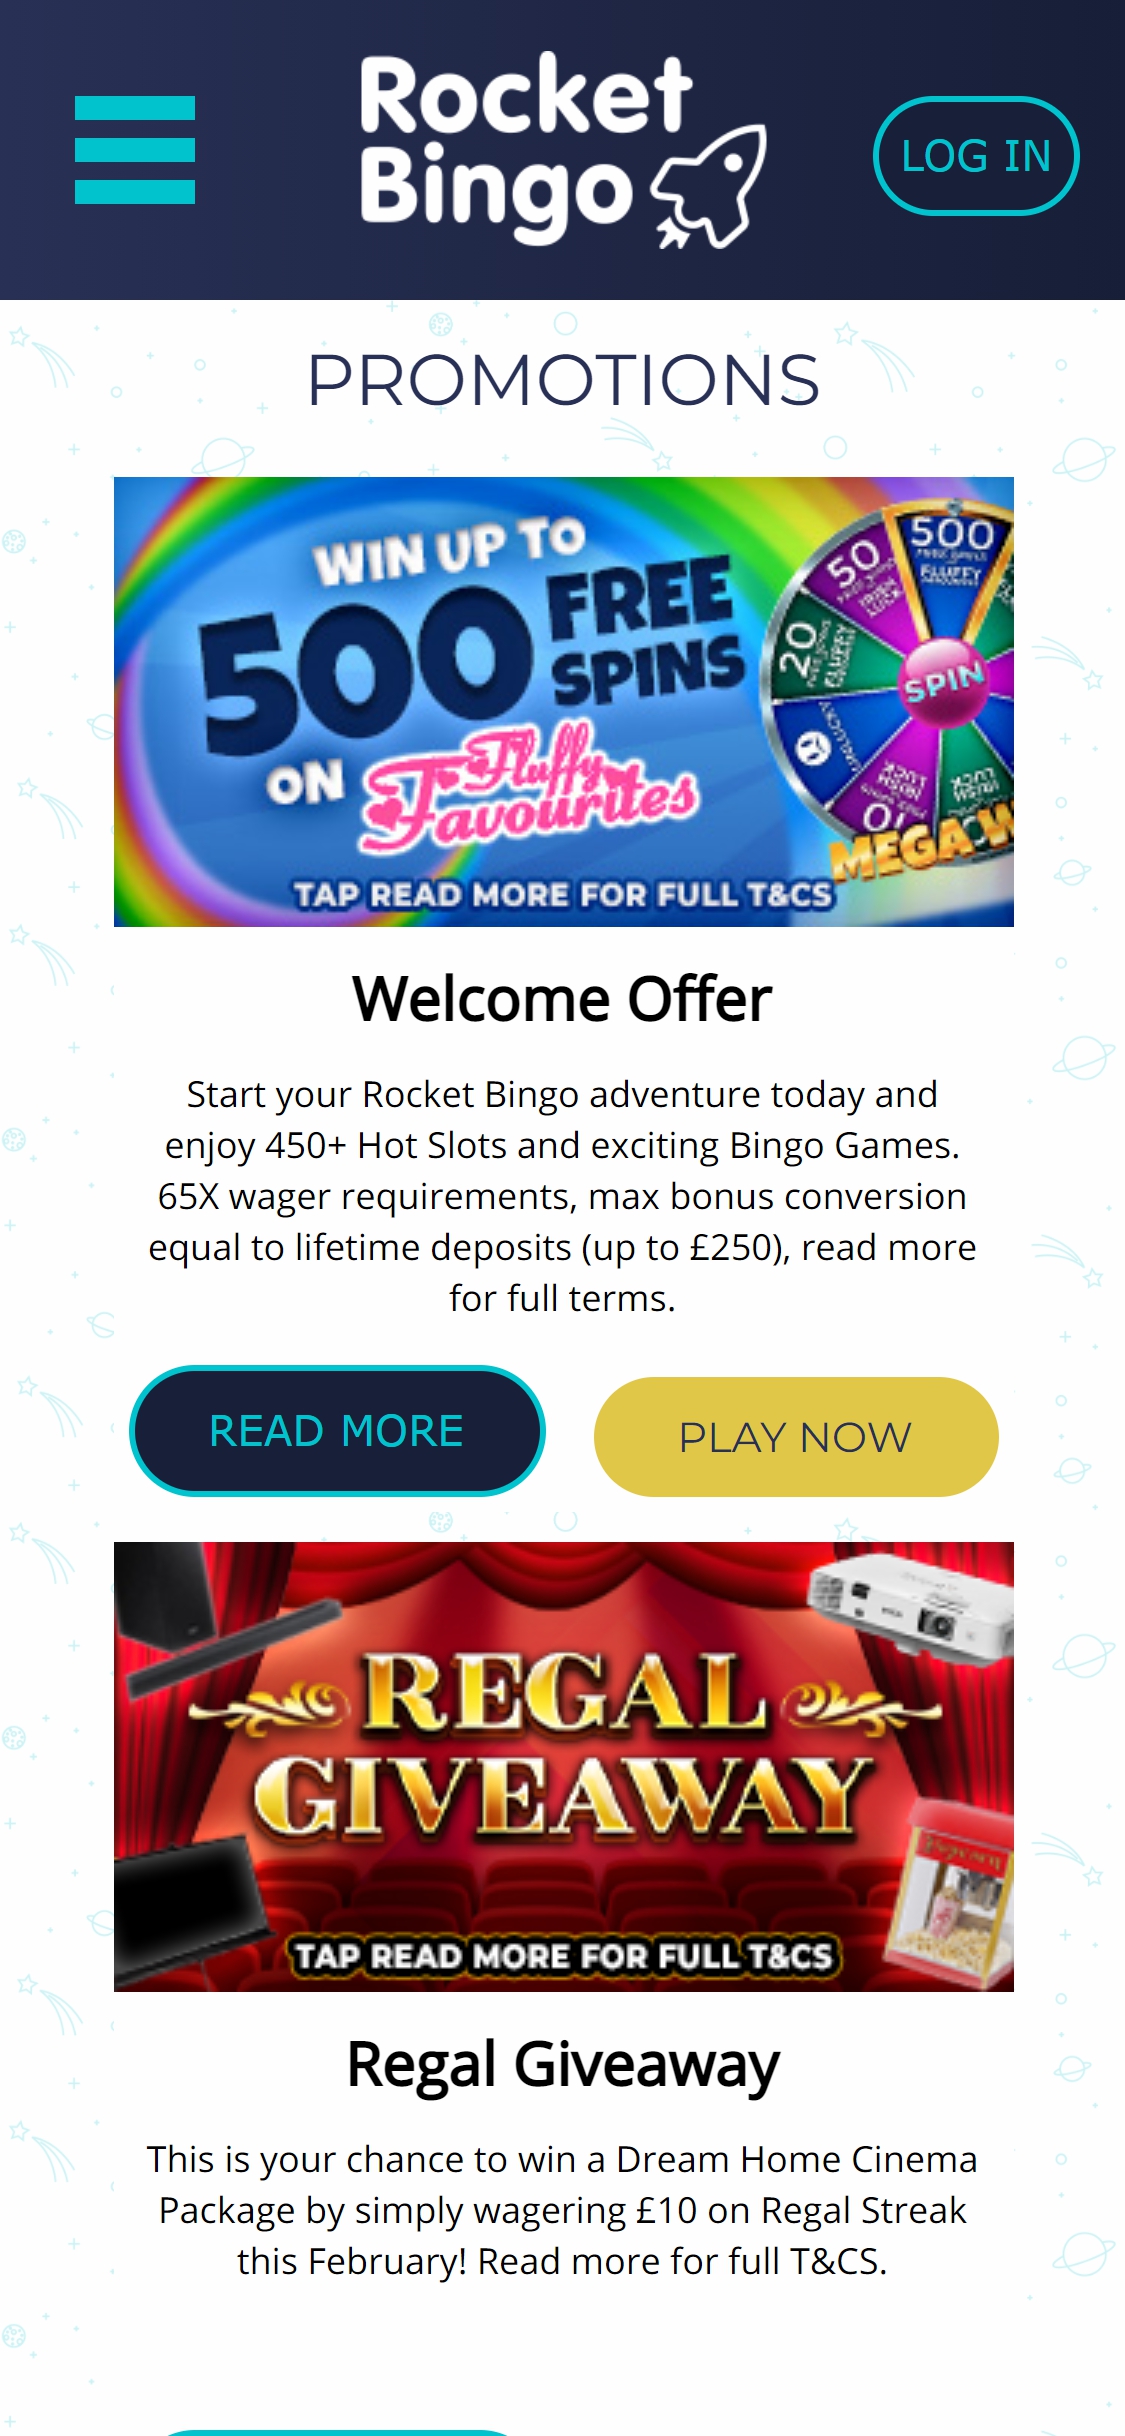 Rocket Bingo Casino Mobile No Deposit Bonus Review